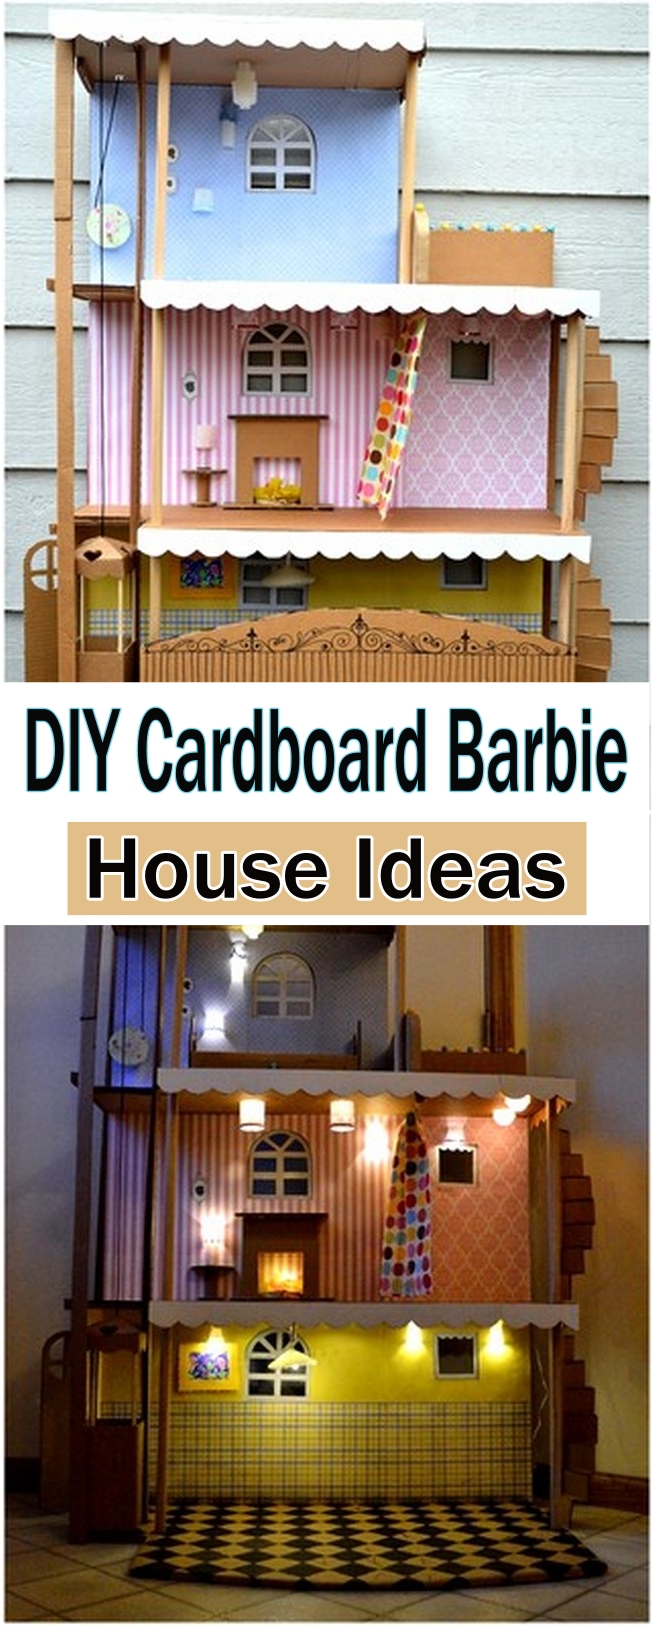 DIY Cardboard Barbie House